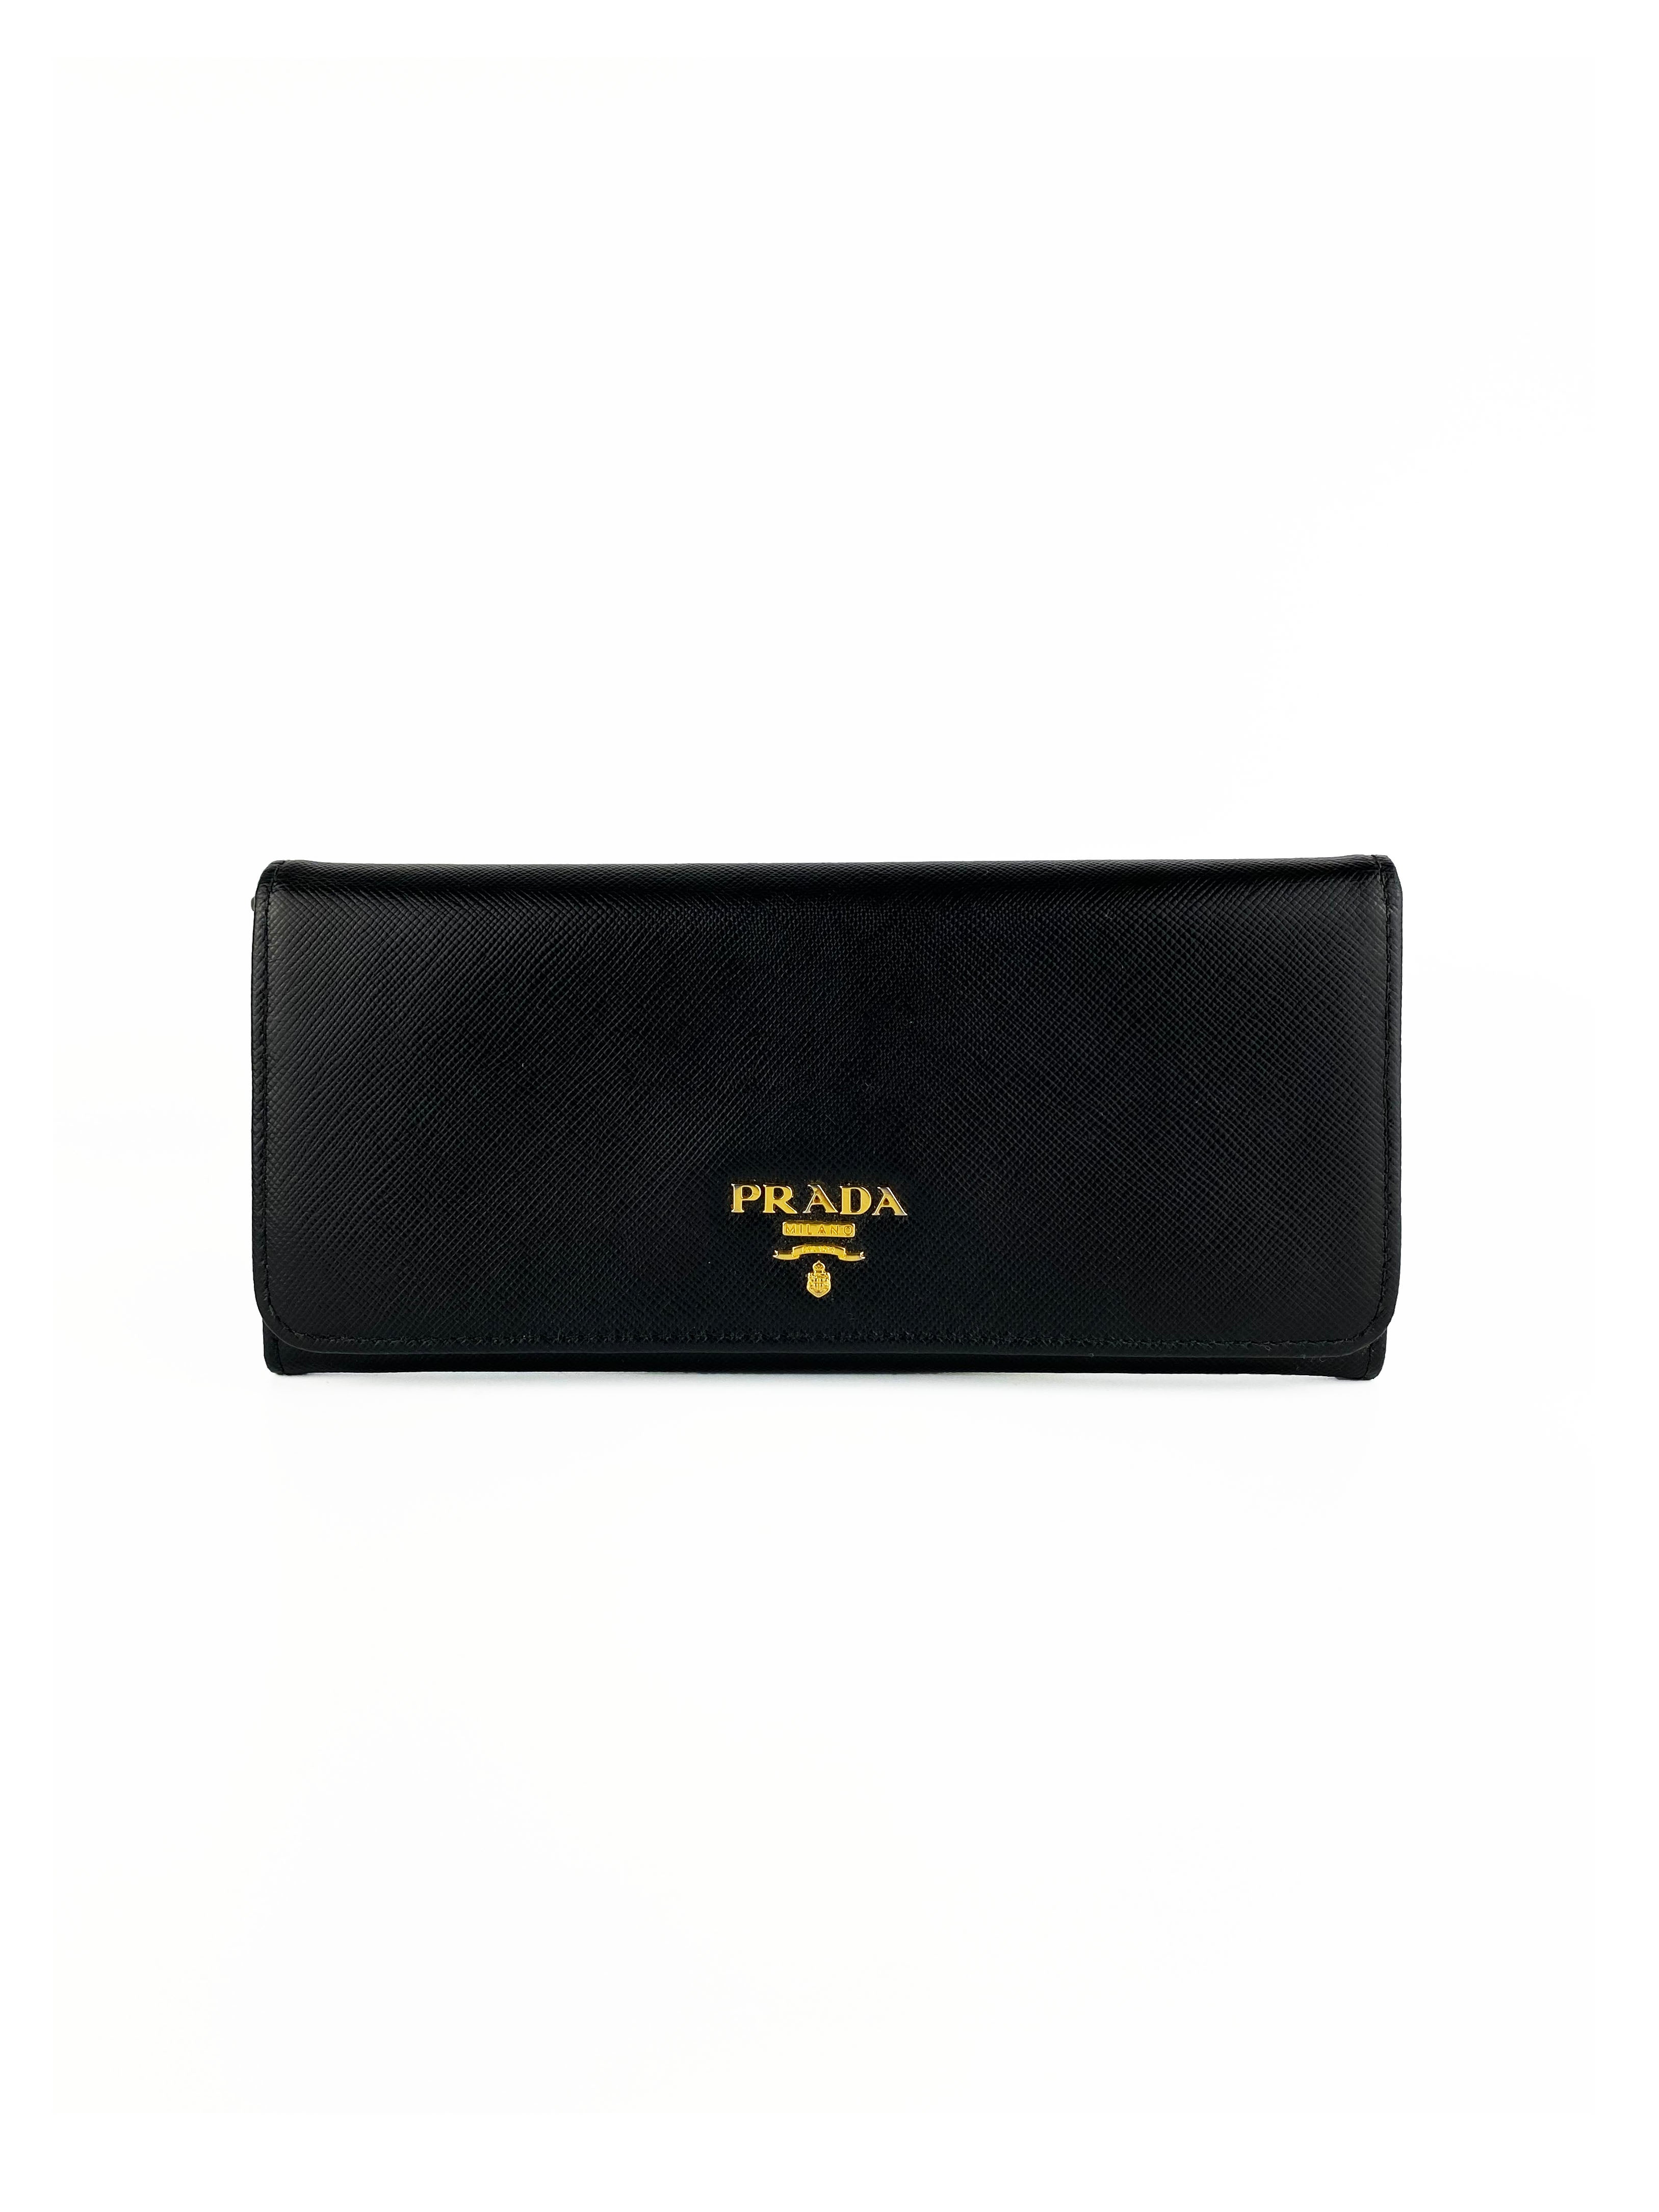 prada-black-saffiano-wallet-6.jpg